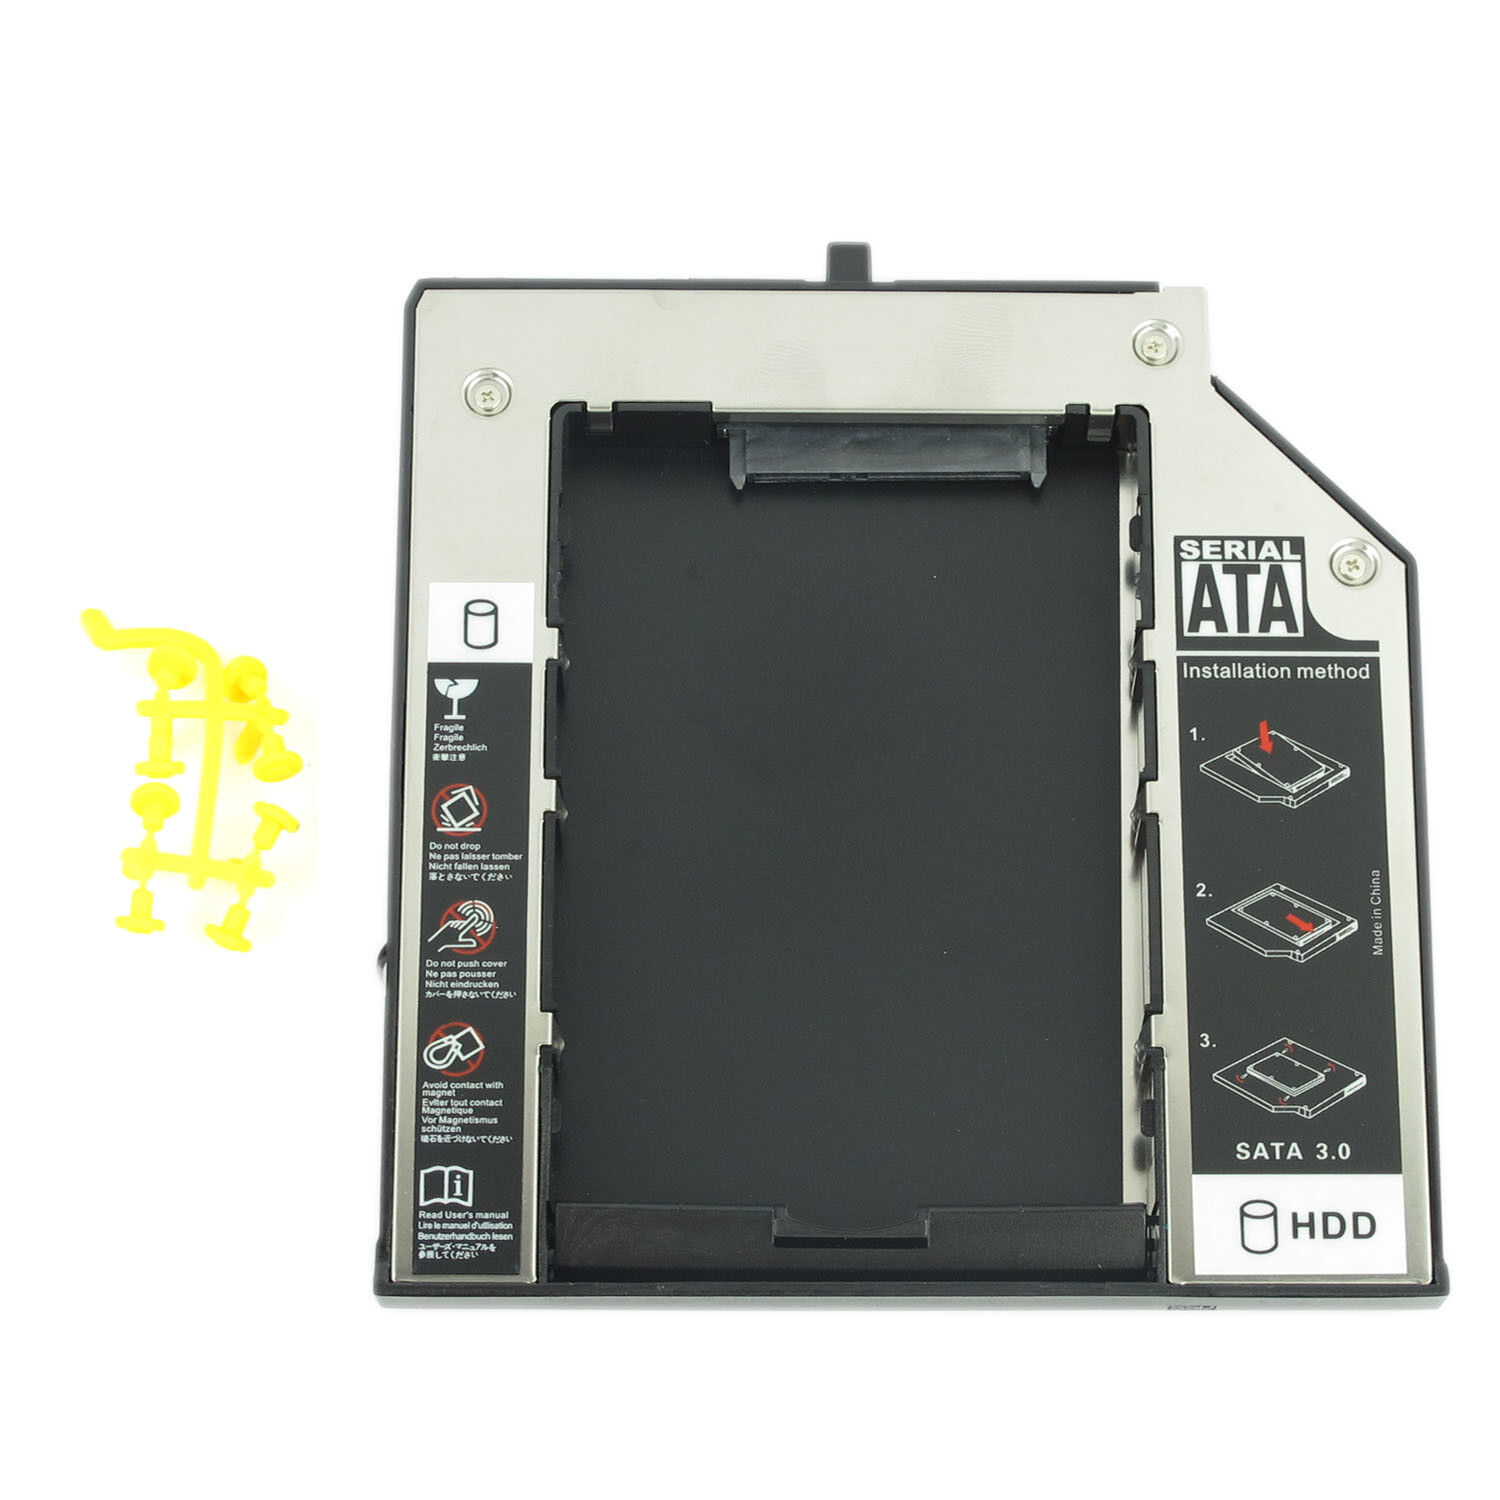 12.7mm Hard Drive Caddy Adapter 2nd SATA For Lenovo Thinkpad W510 W530 T430 T530